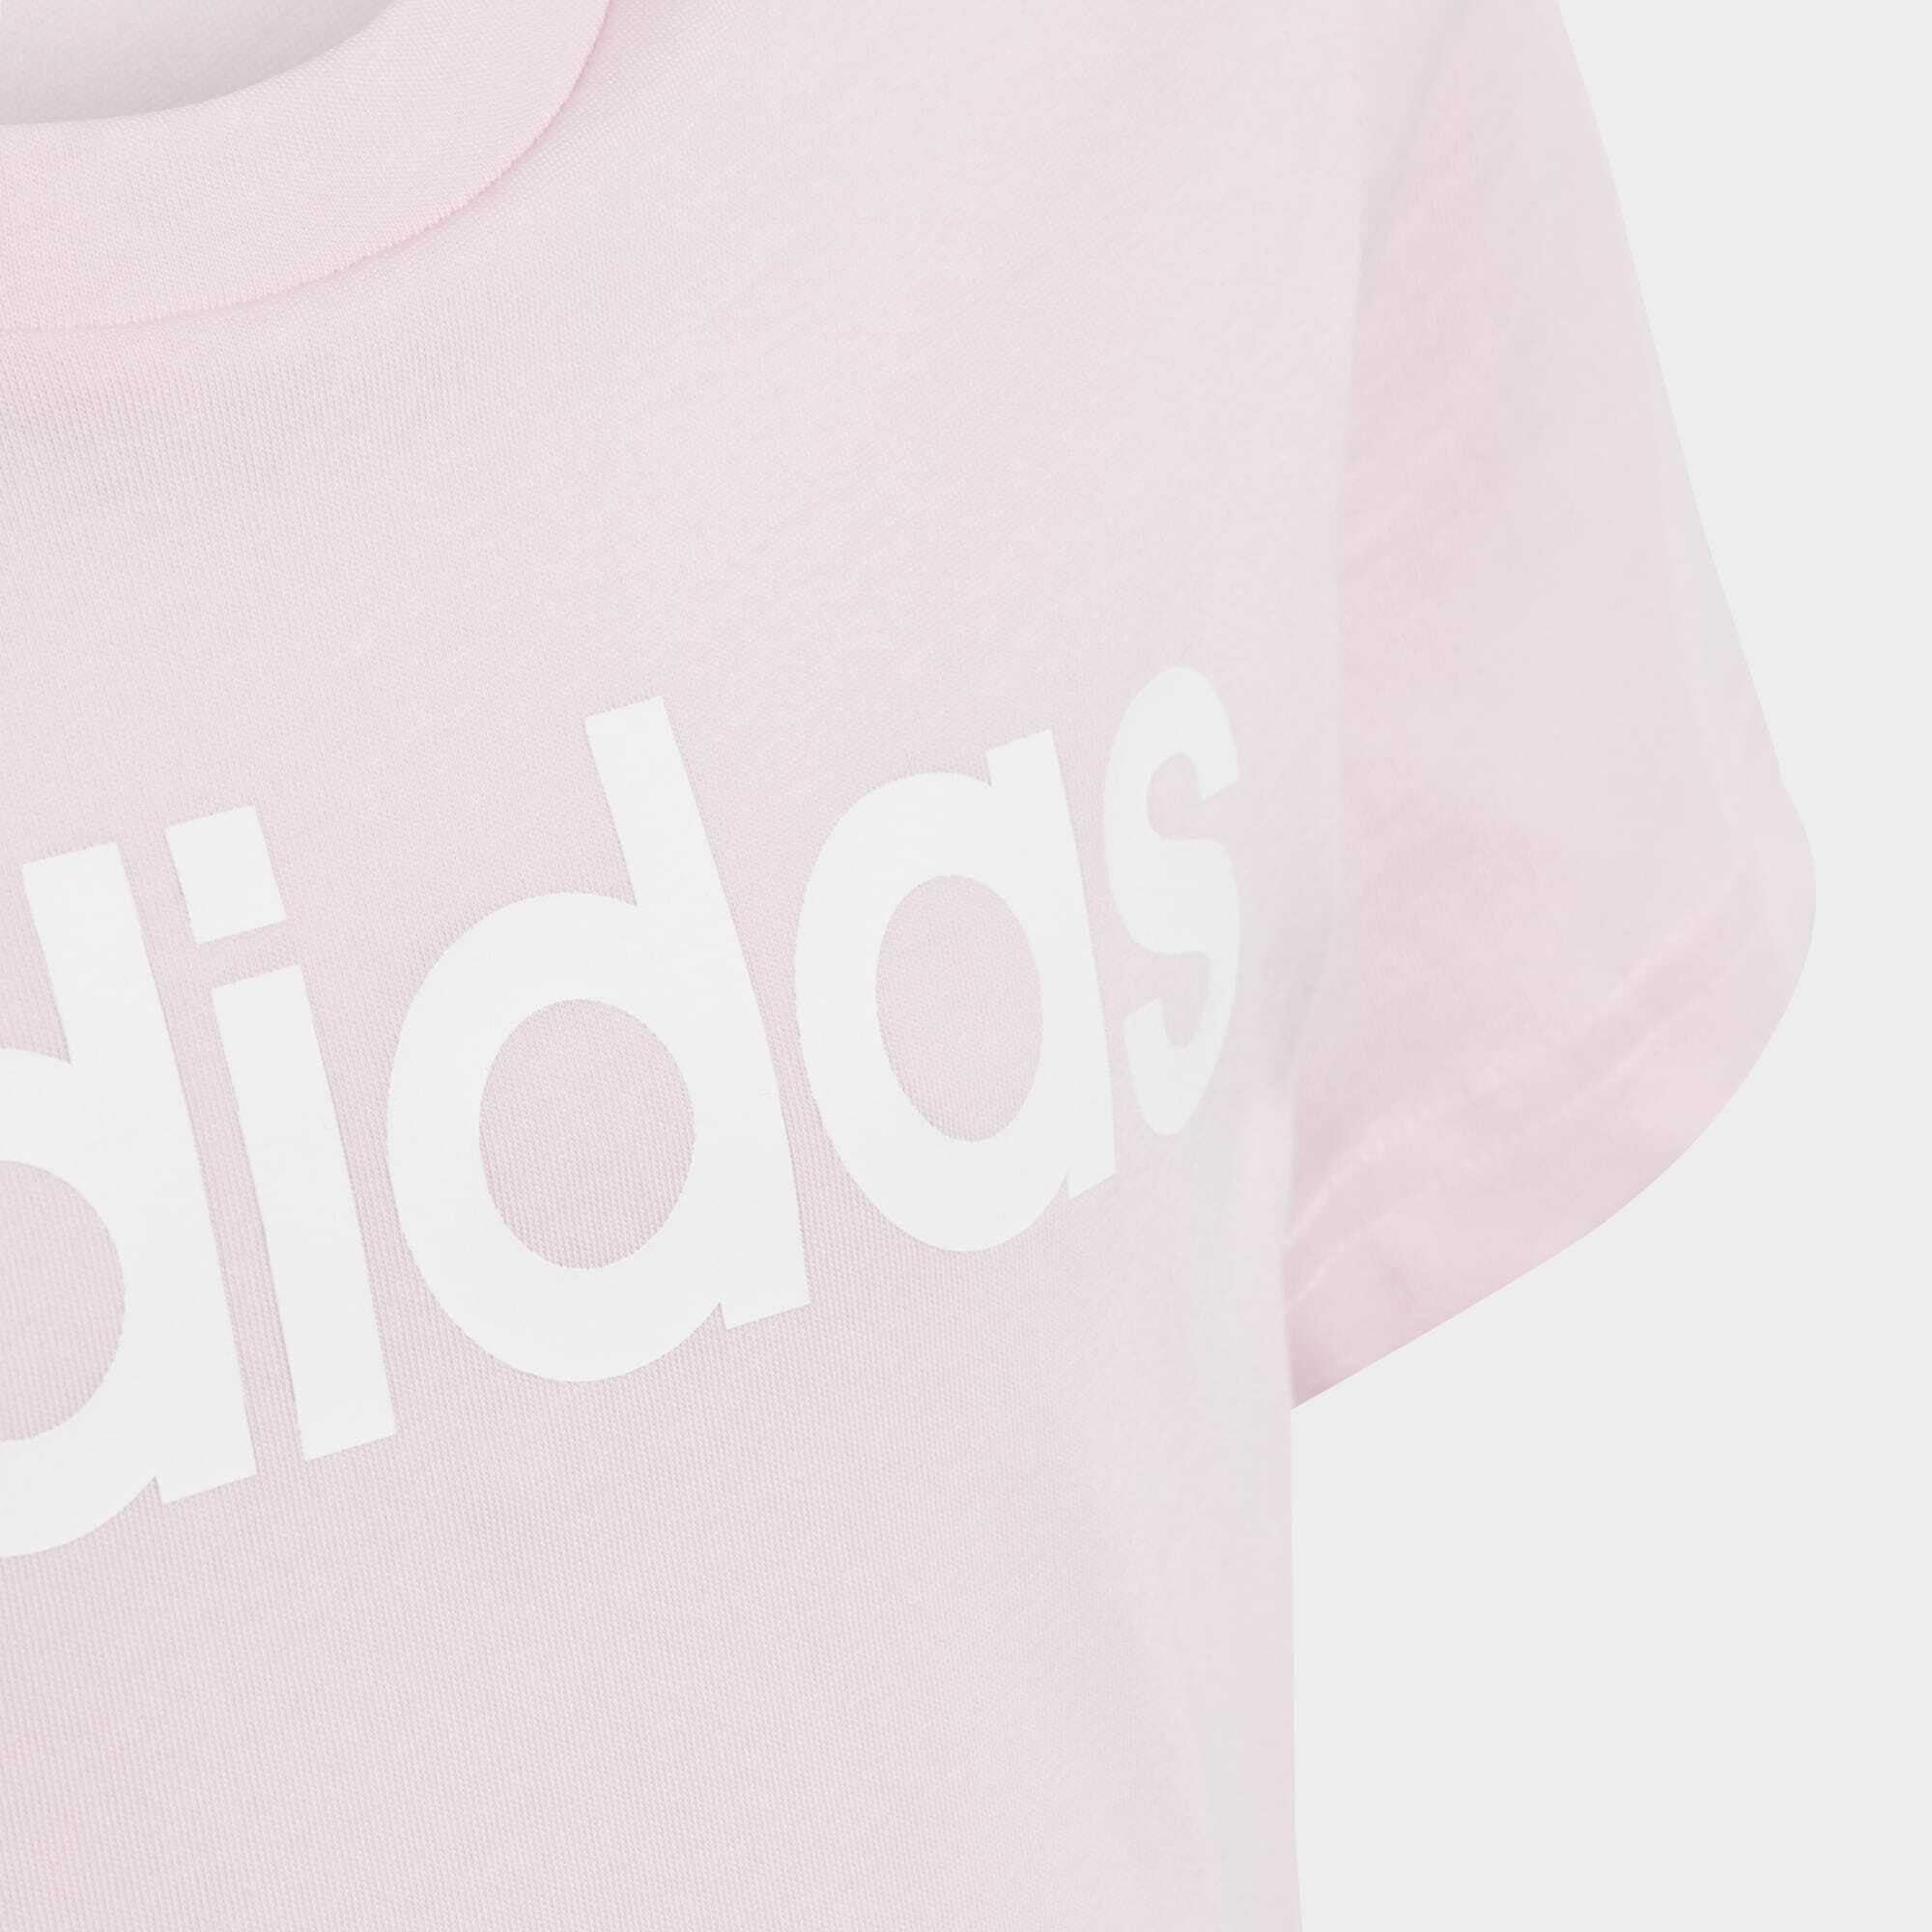 adidas Sportswear T-Shirt LINEAR Pink White T-SHIRT Clear SLIM LOGO / COTTON ESSENTIALS FIT